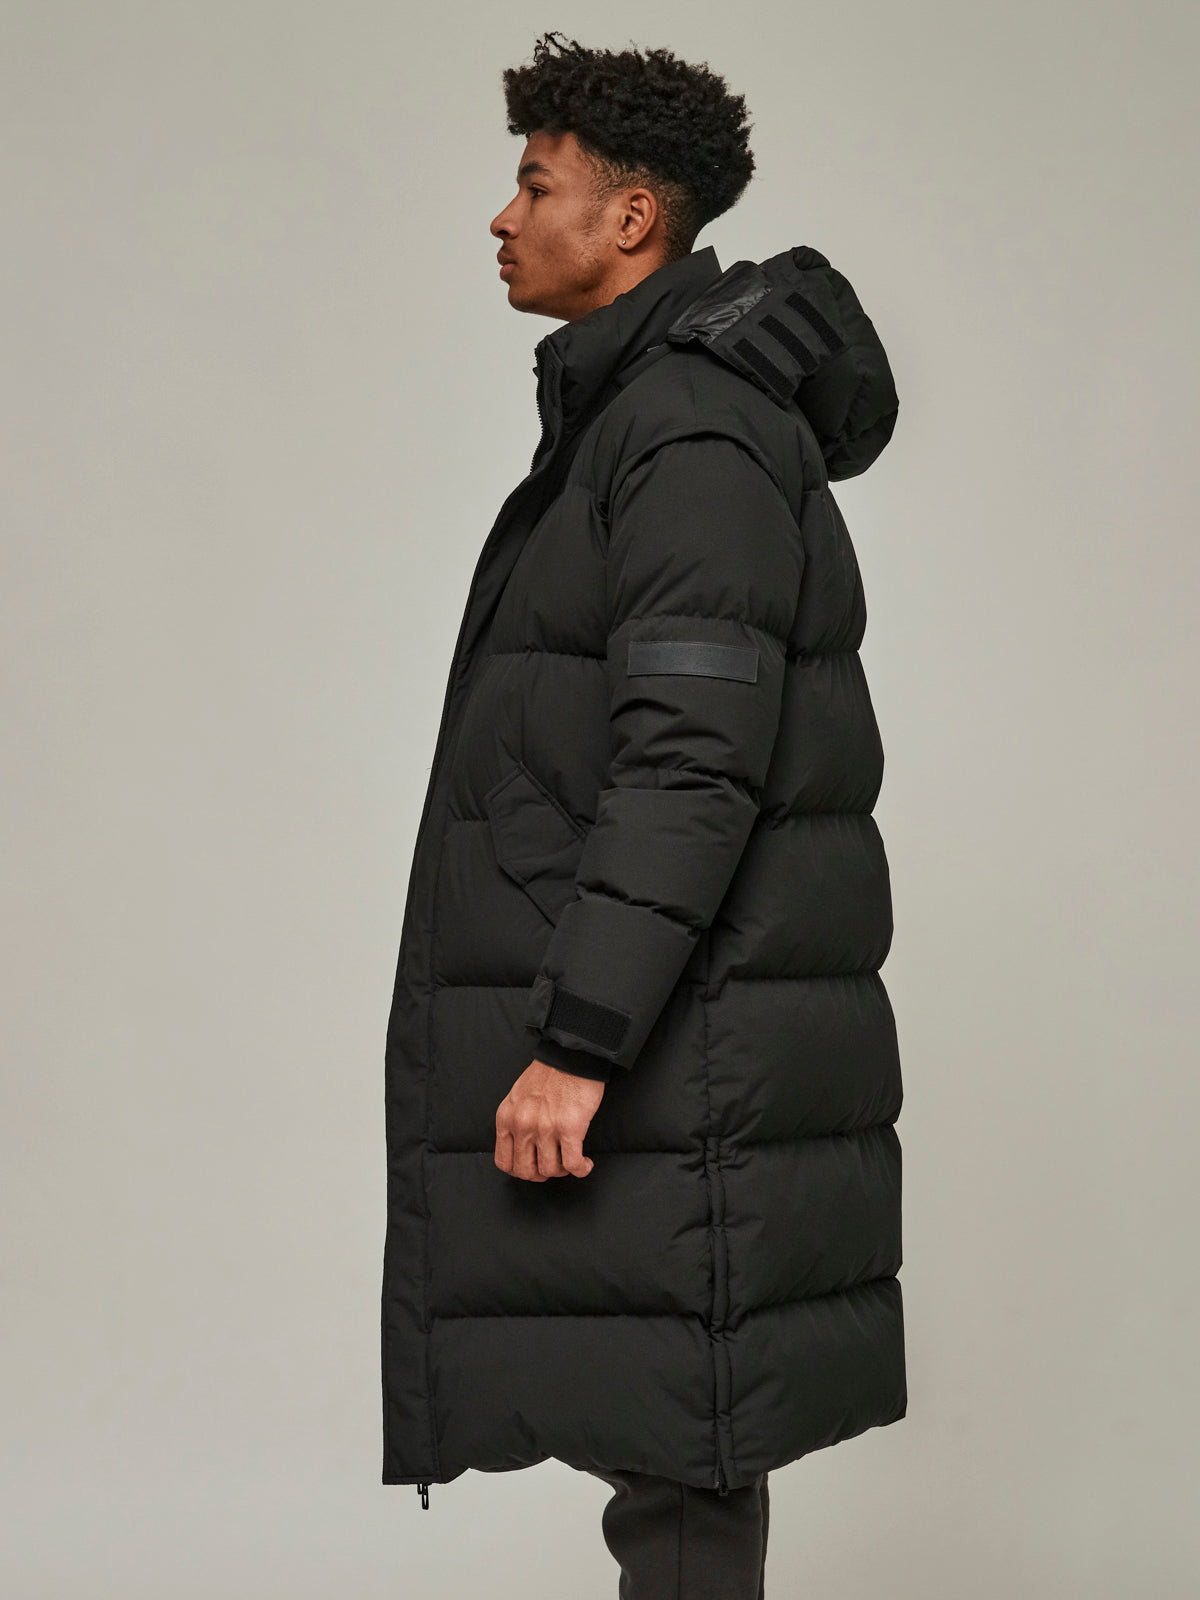 Carbon Black Long Puffer Jacket/ LMTD edition